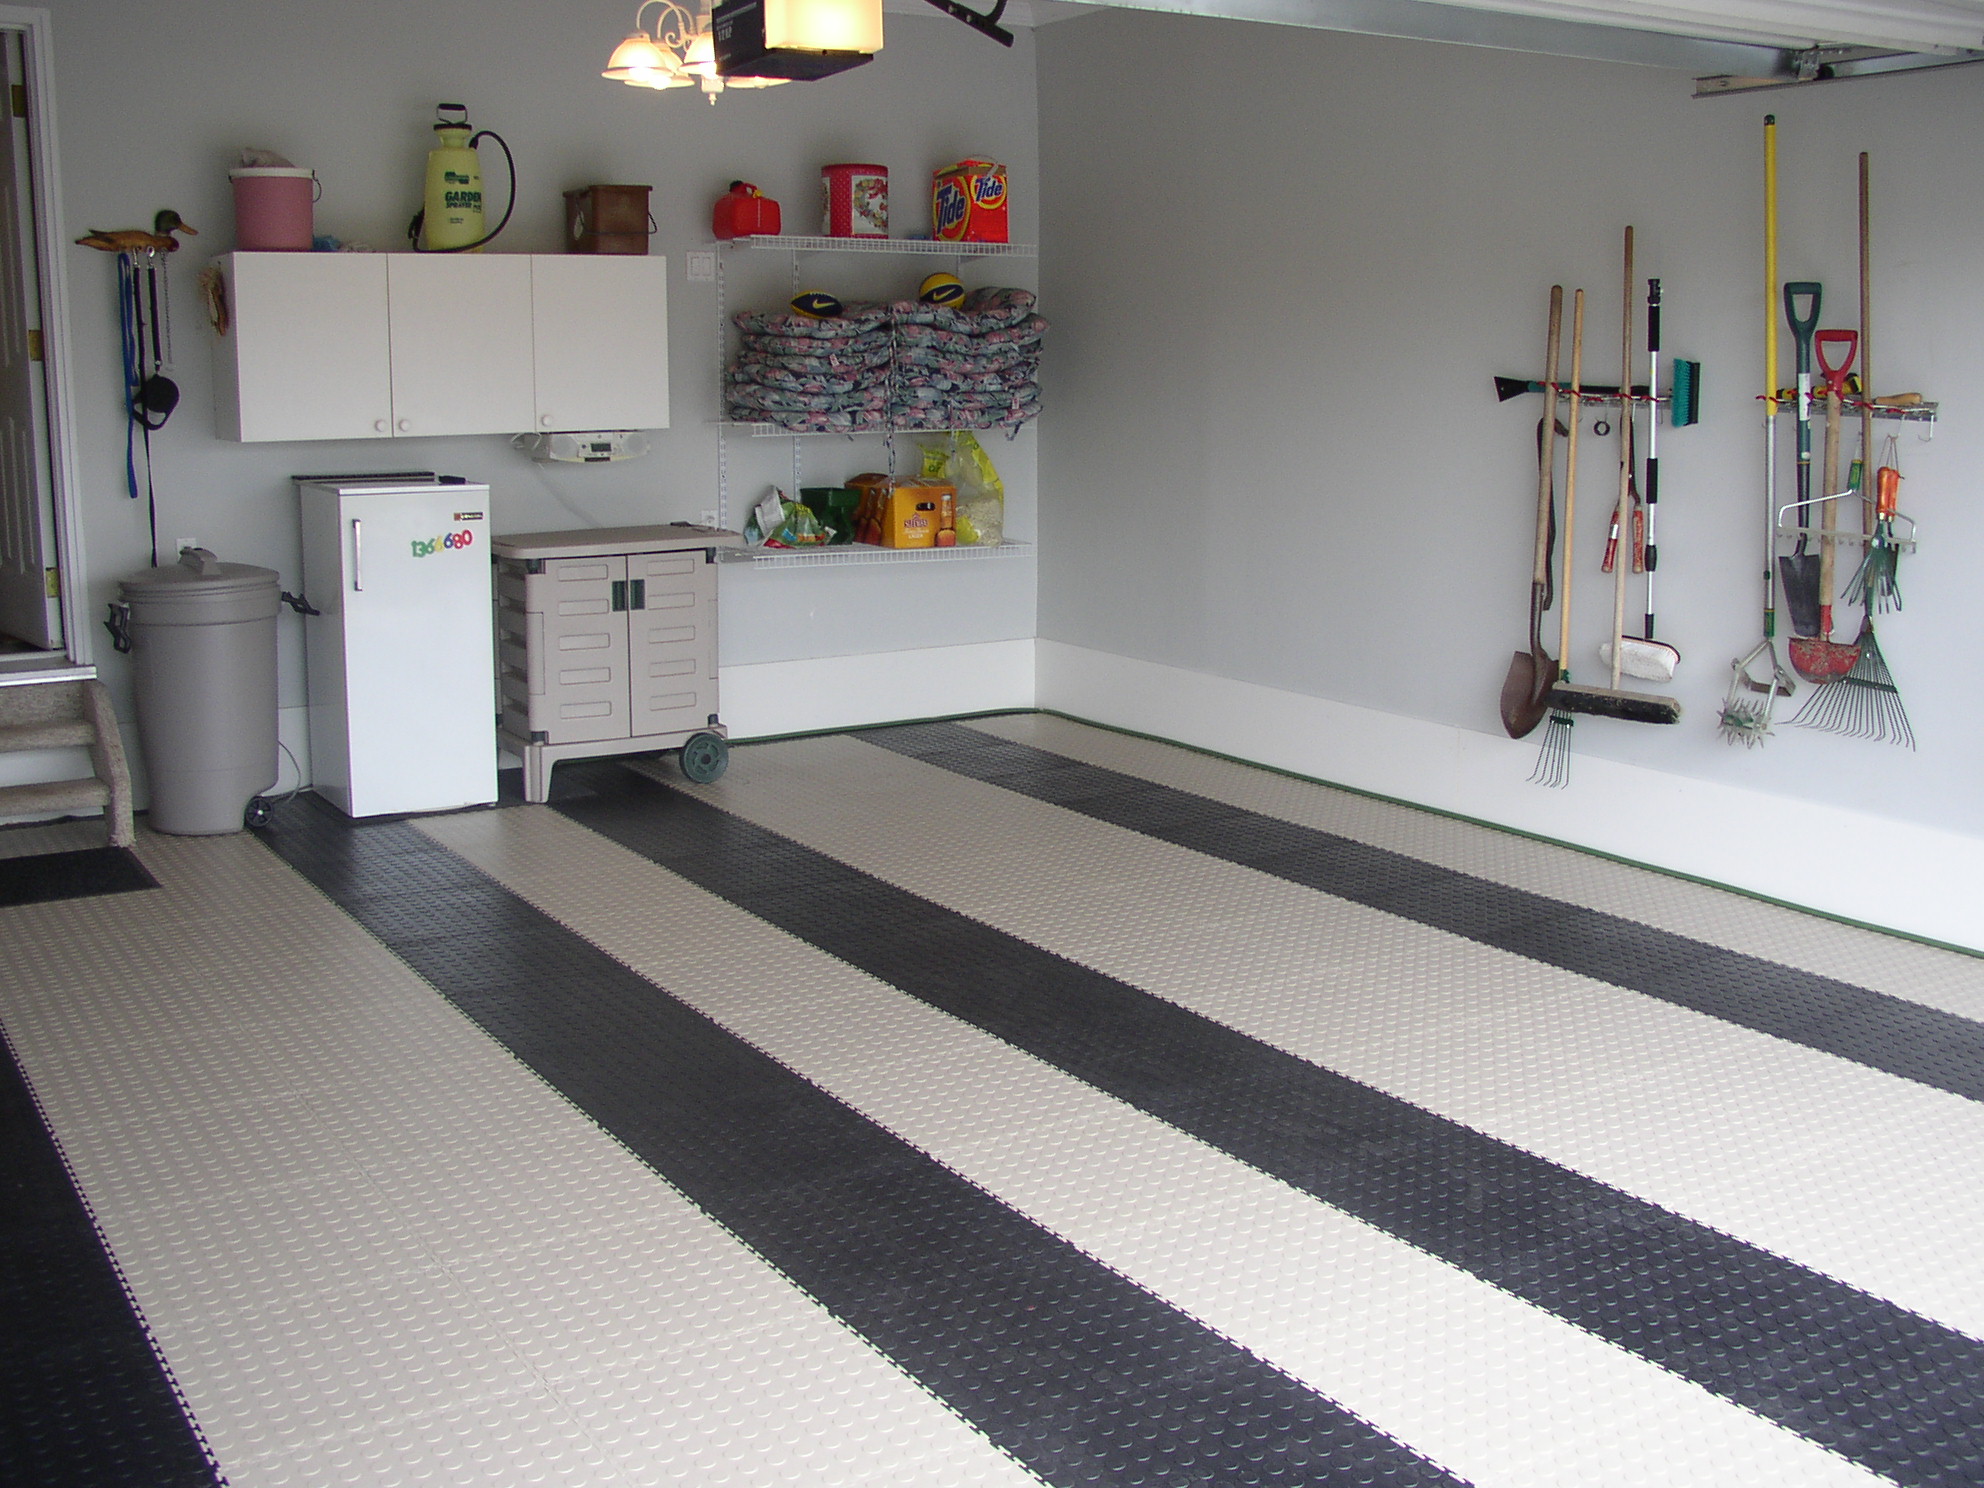 garage flooring tiles